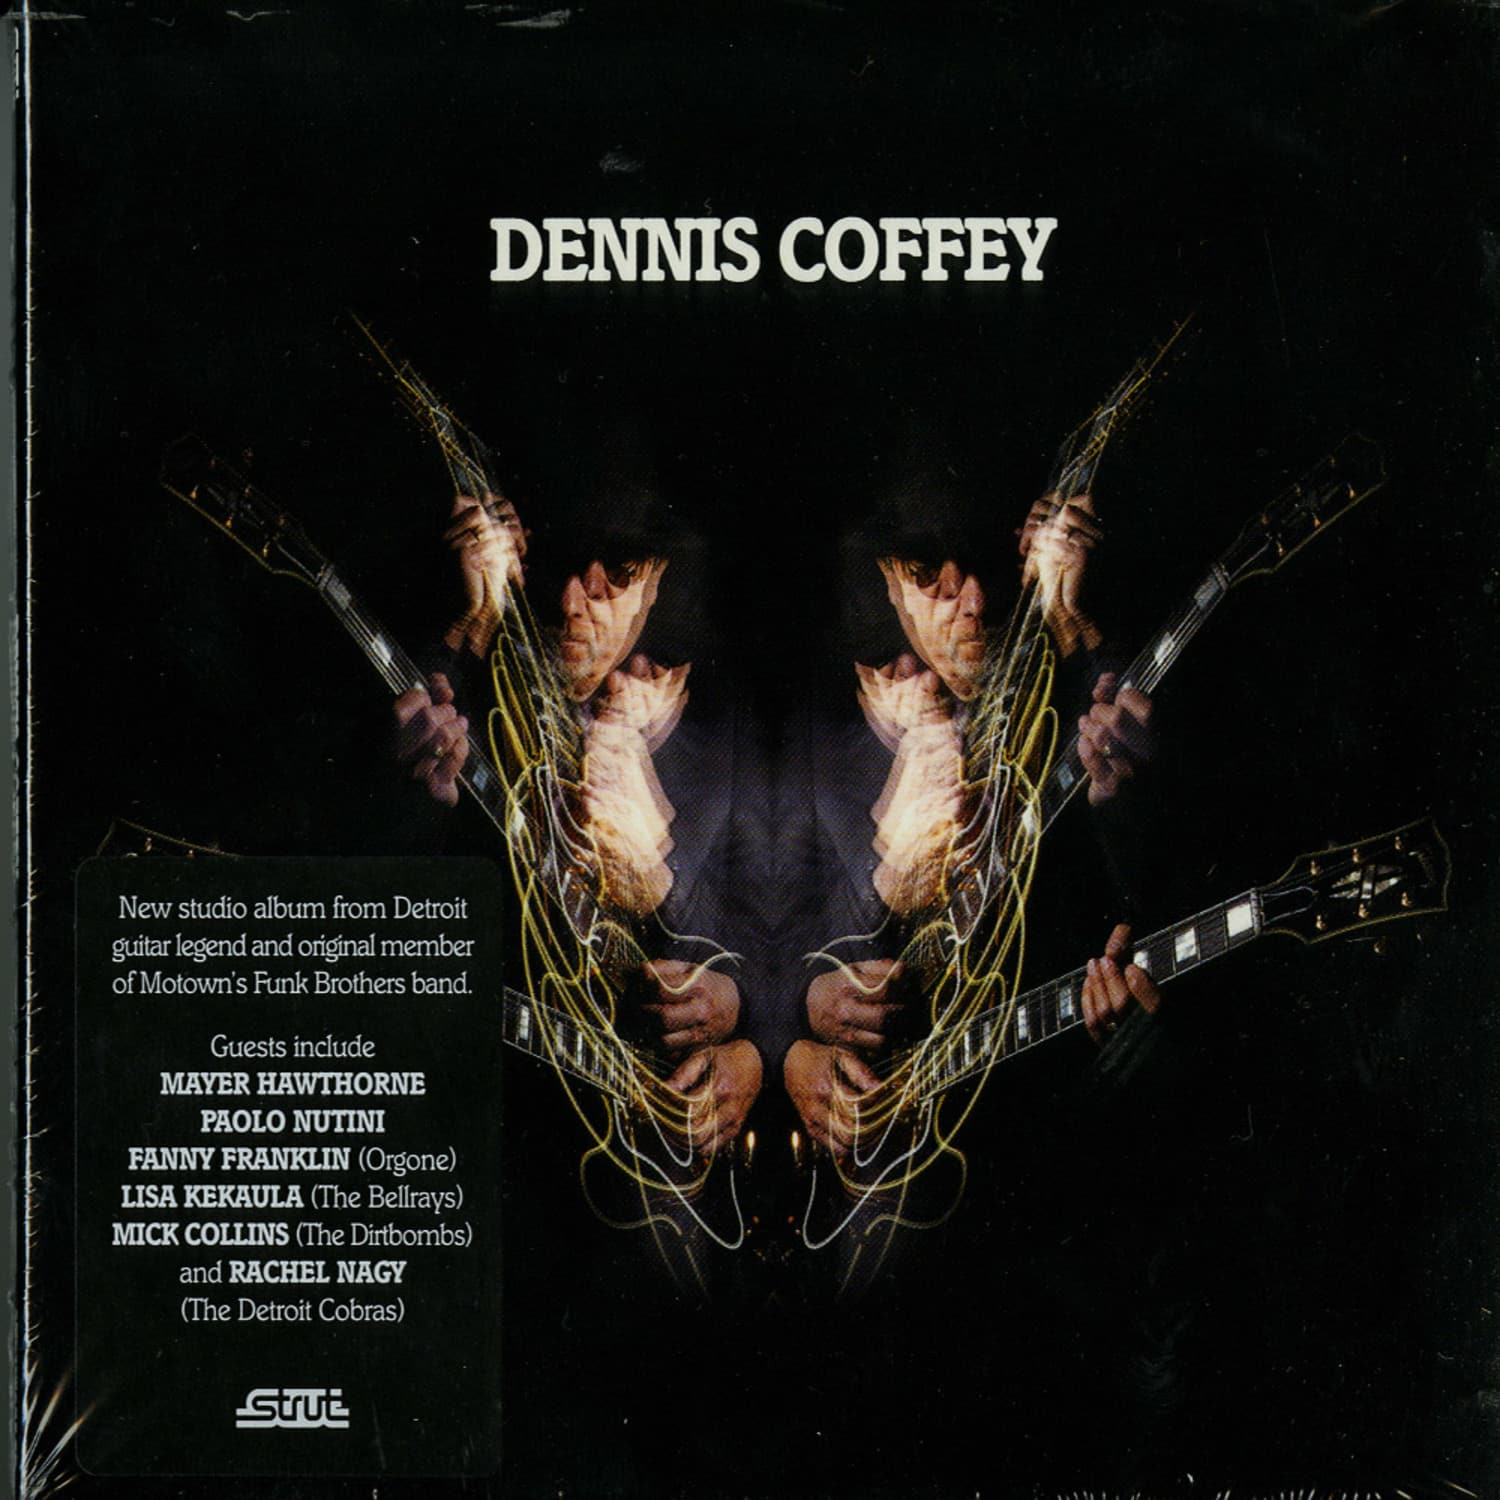 Dennis Coffey - DENNIS COFFEY 